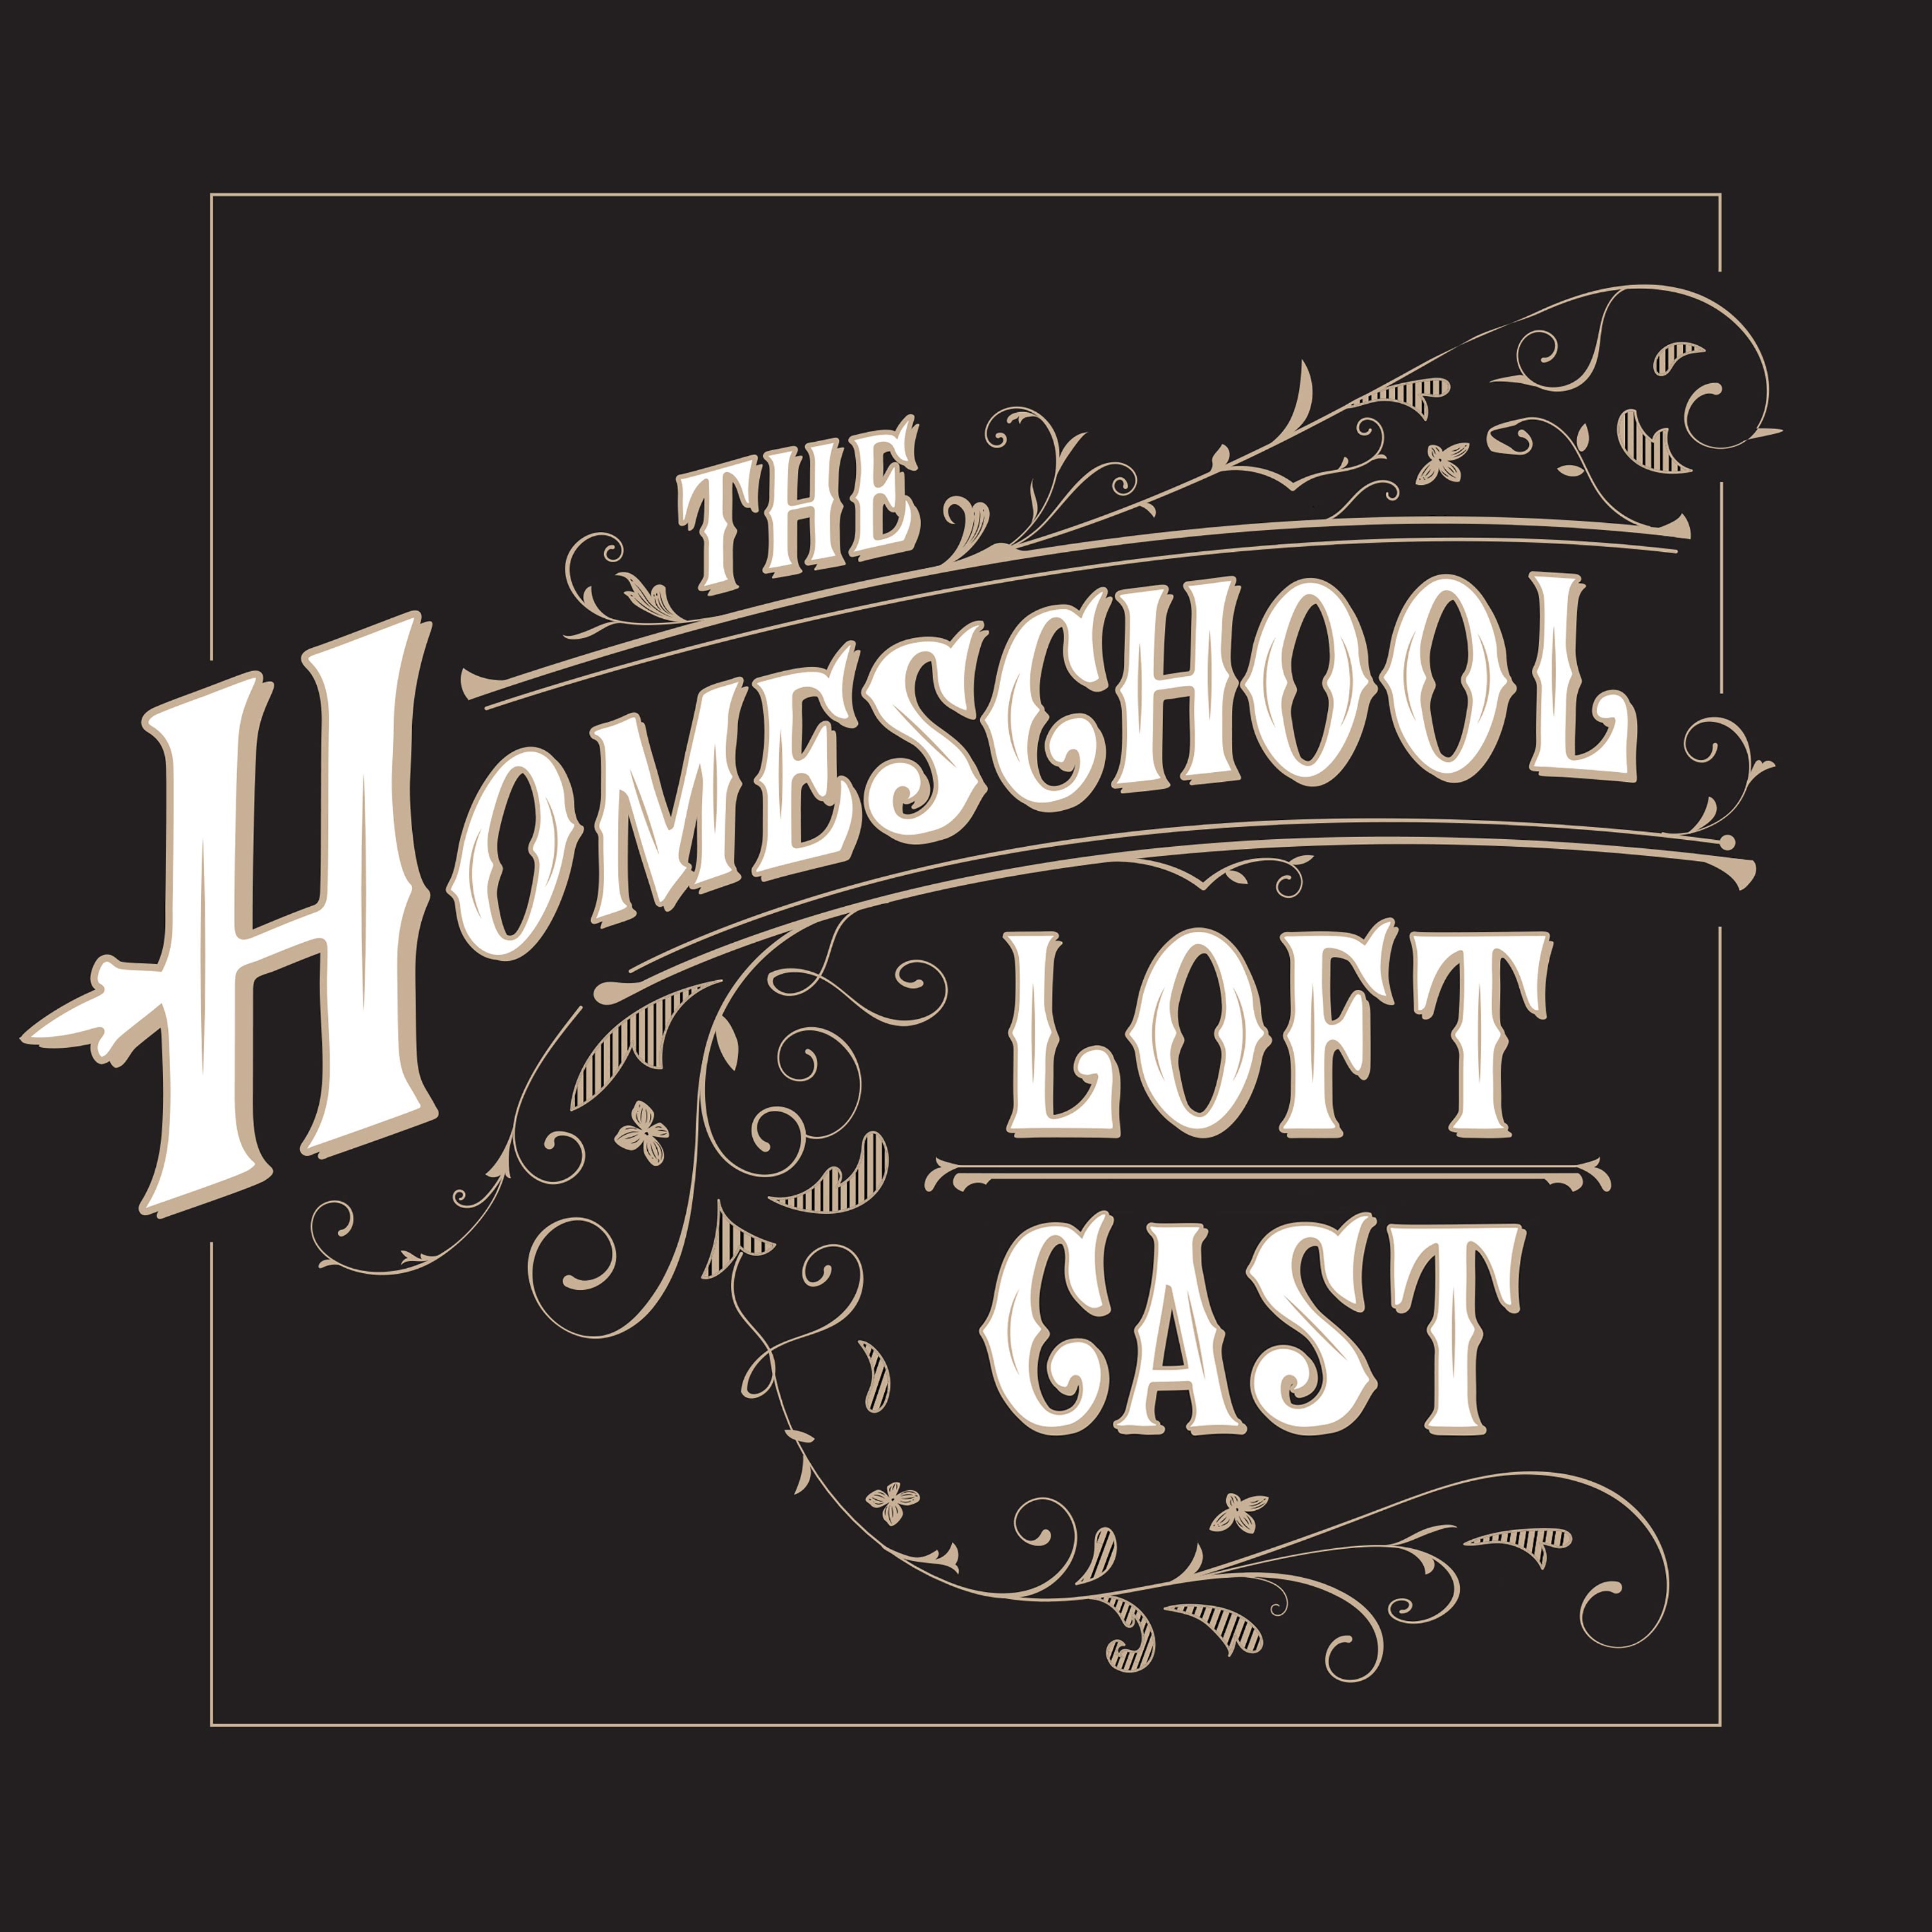 Homeschool Loft Cast